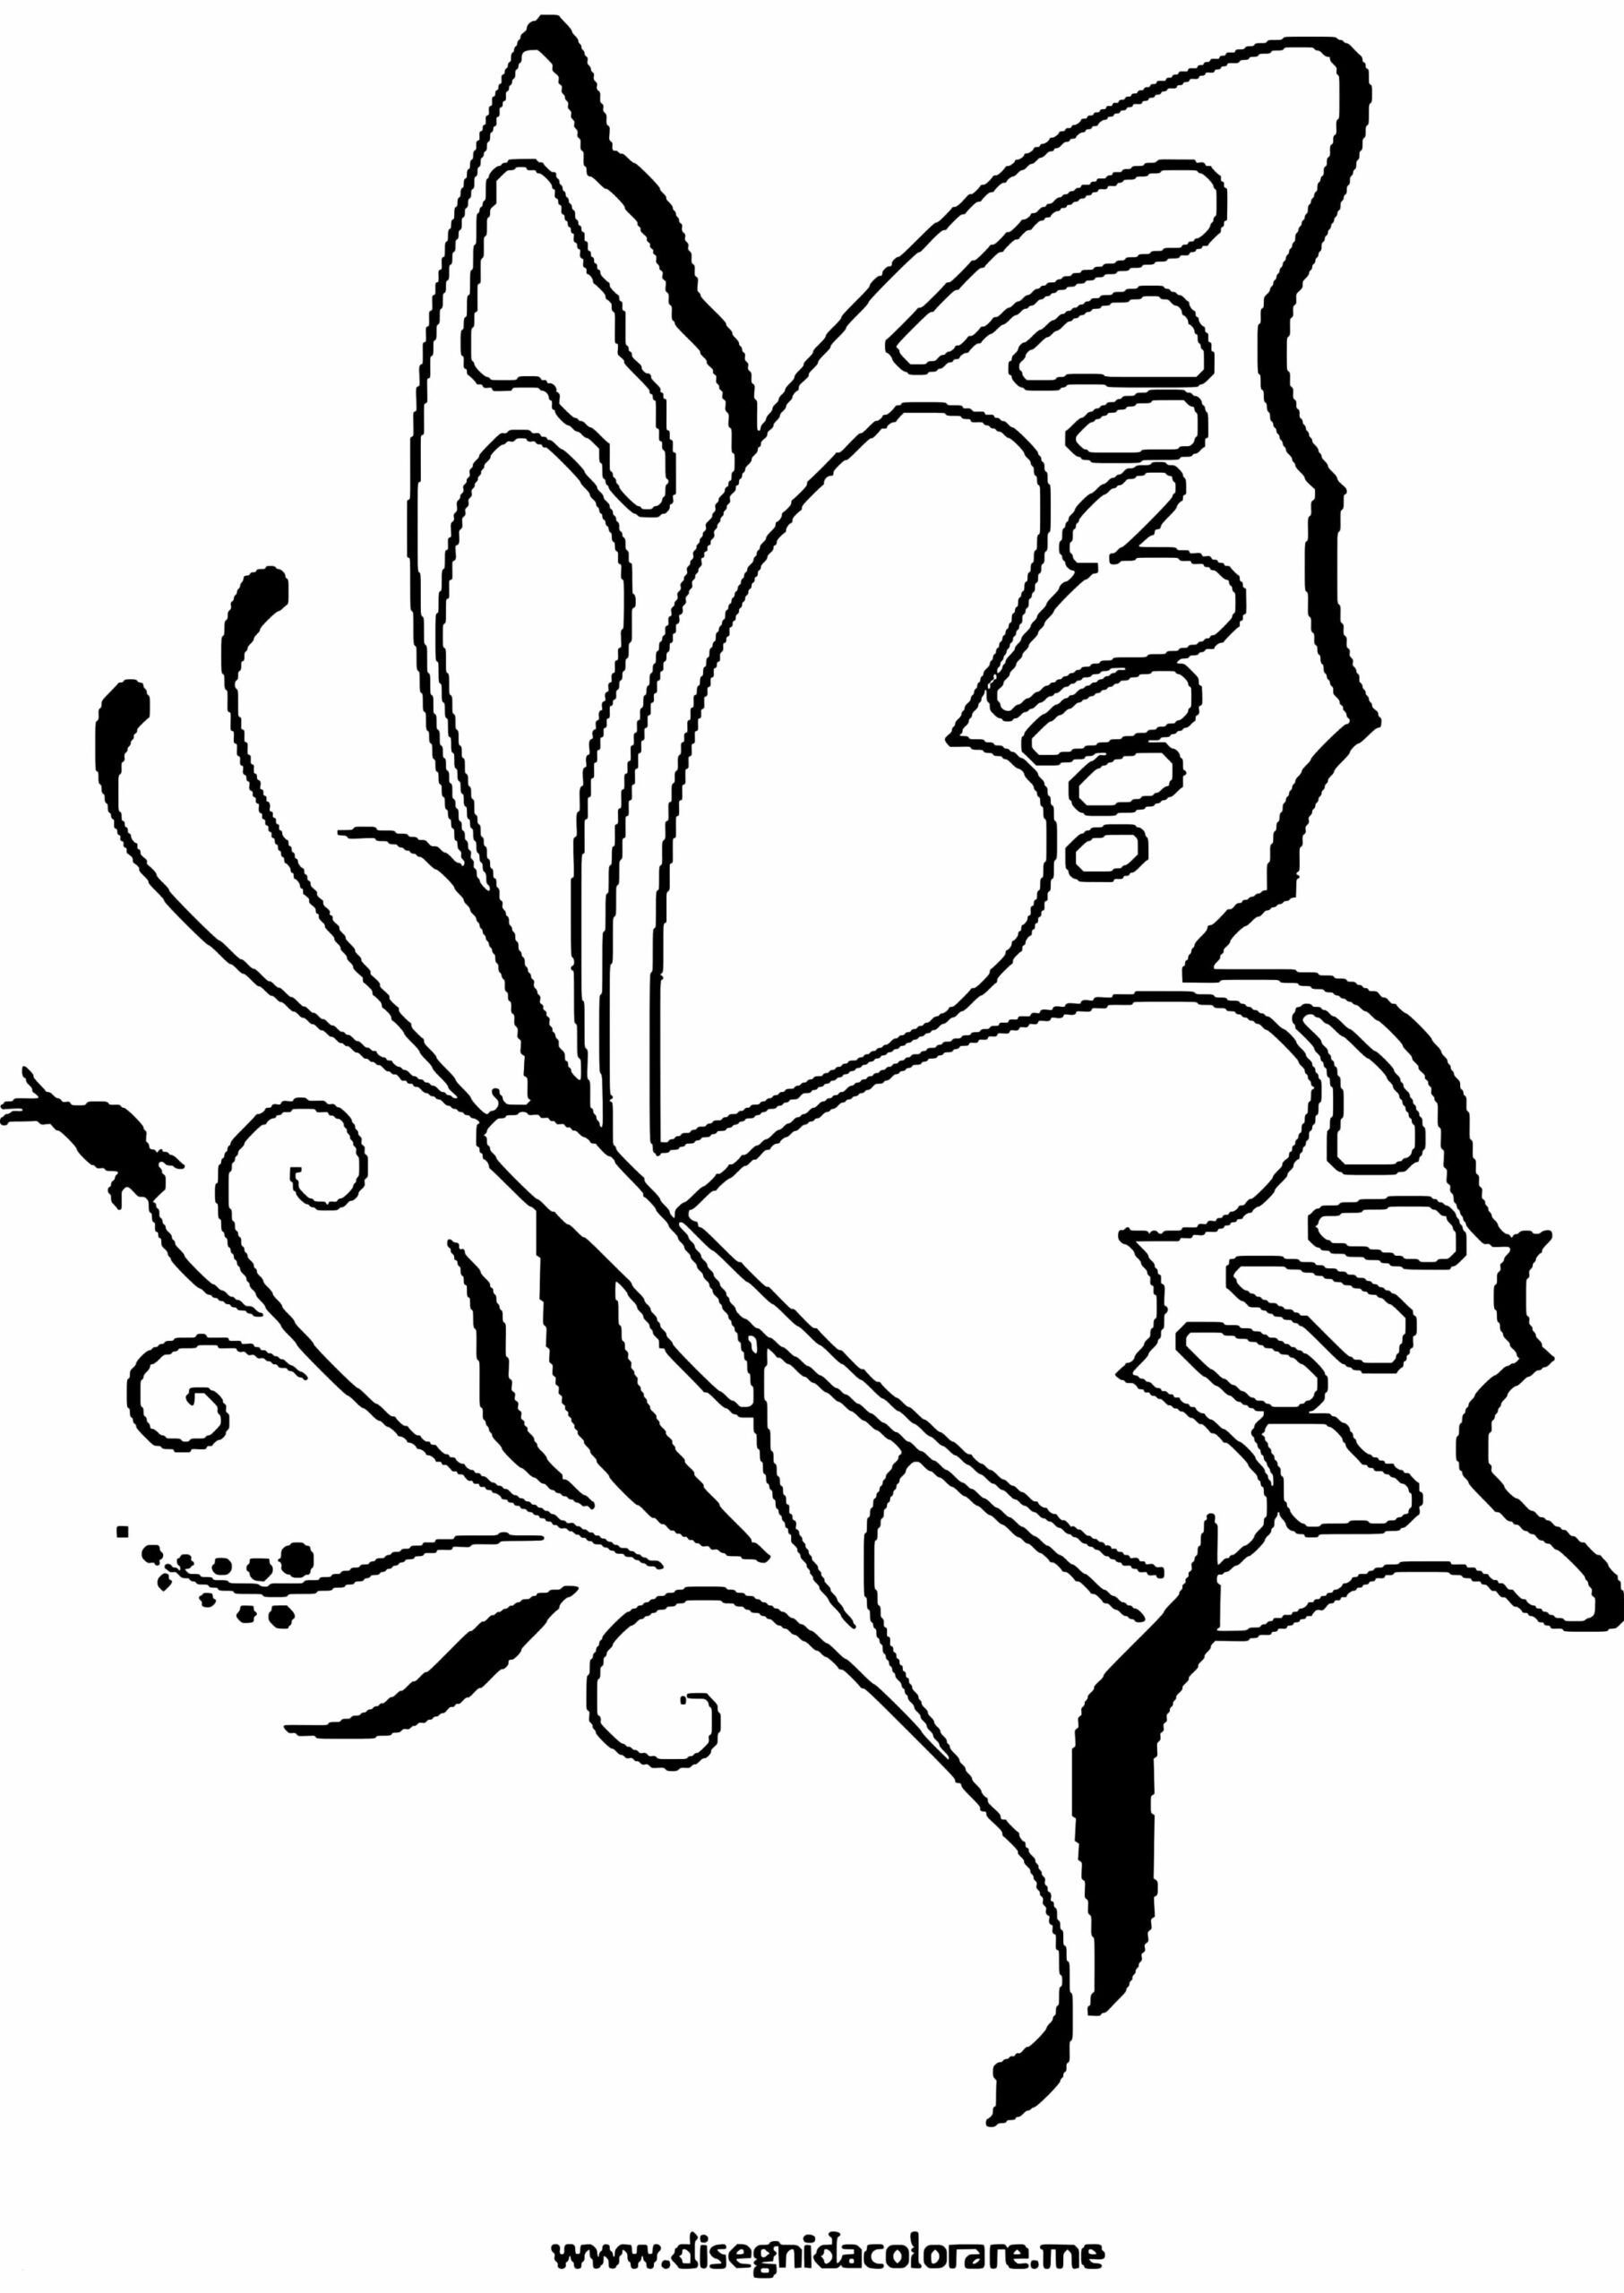 Трафарет бабочки на цветах